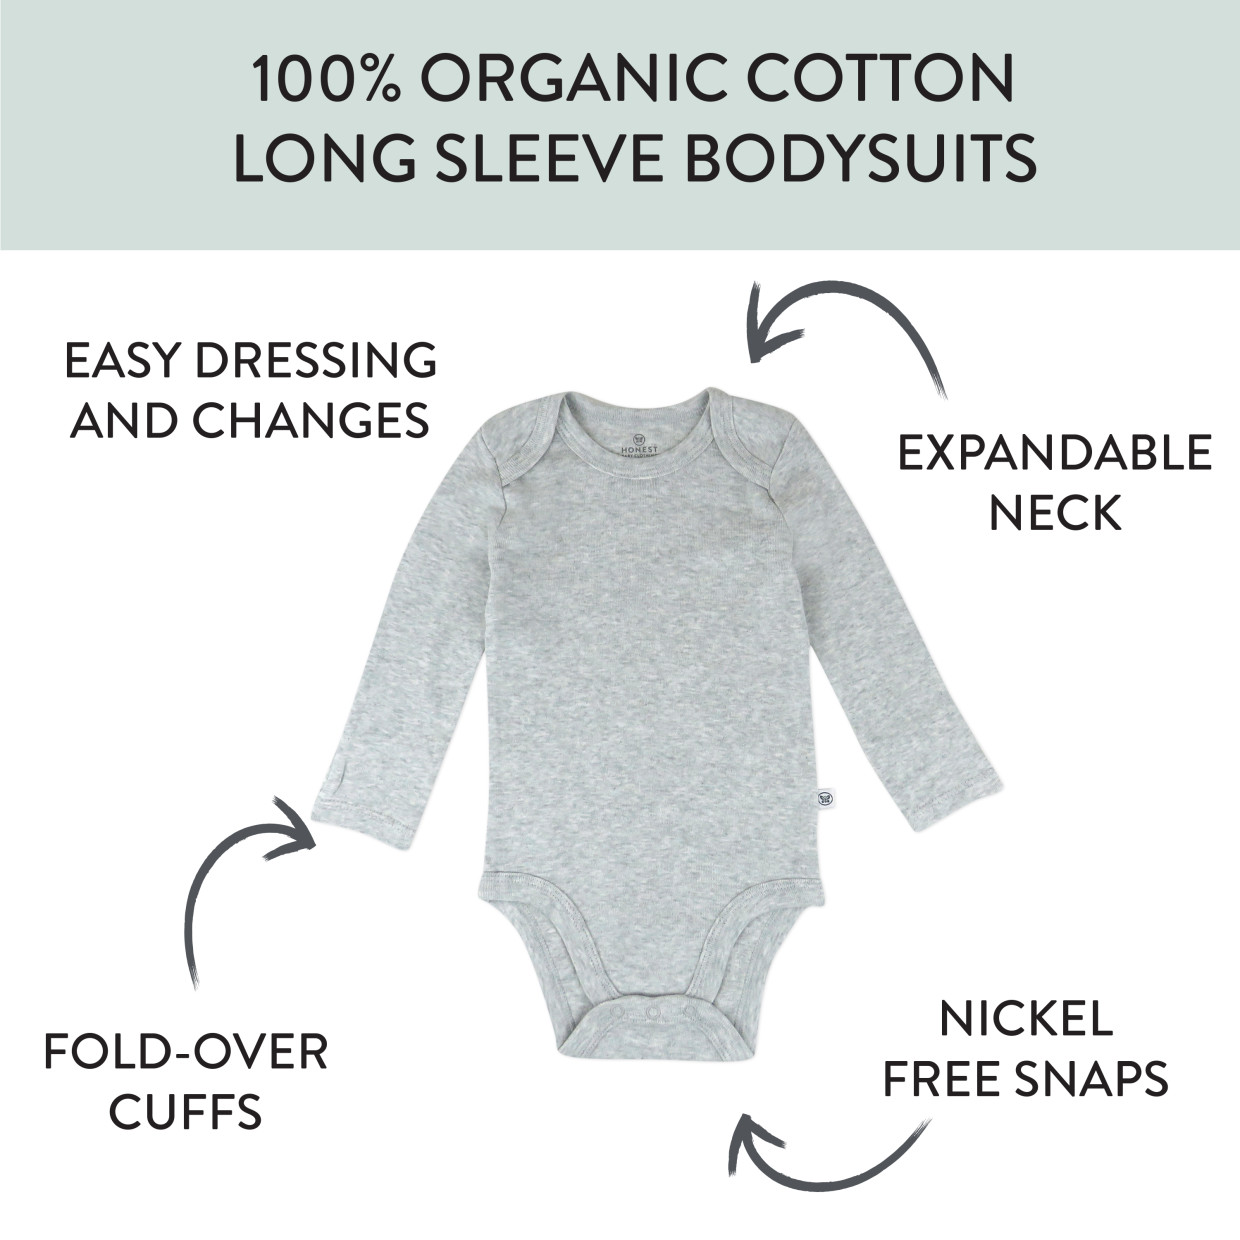 Honest Baby Clothing 5-Pack Organic Cotton Short Sleeve Bodysuit - Twinkle Star Navy, Nb, 5.